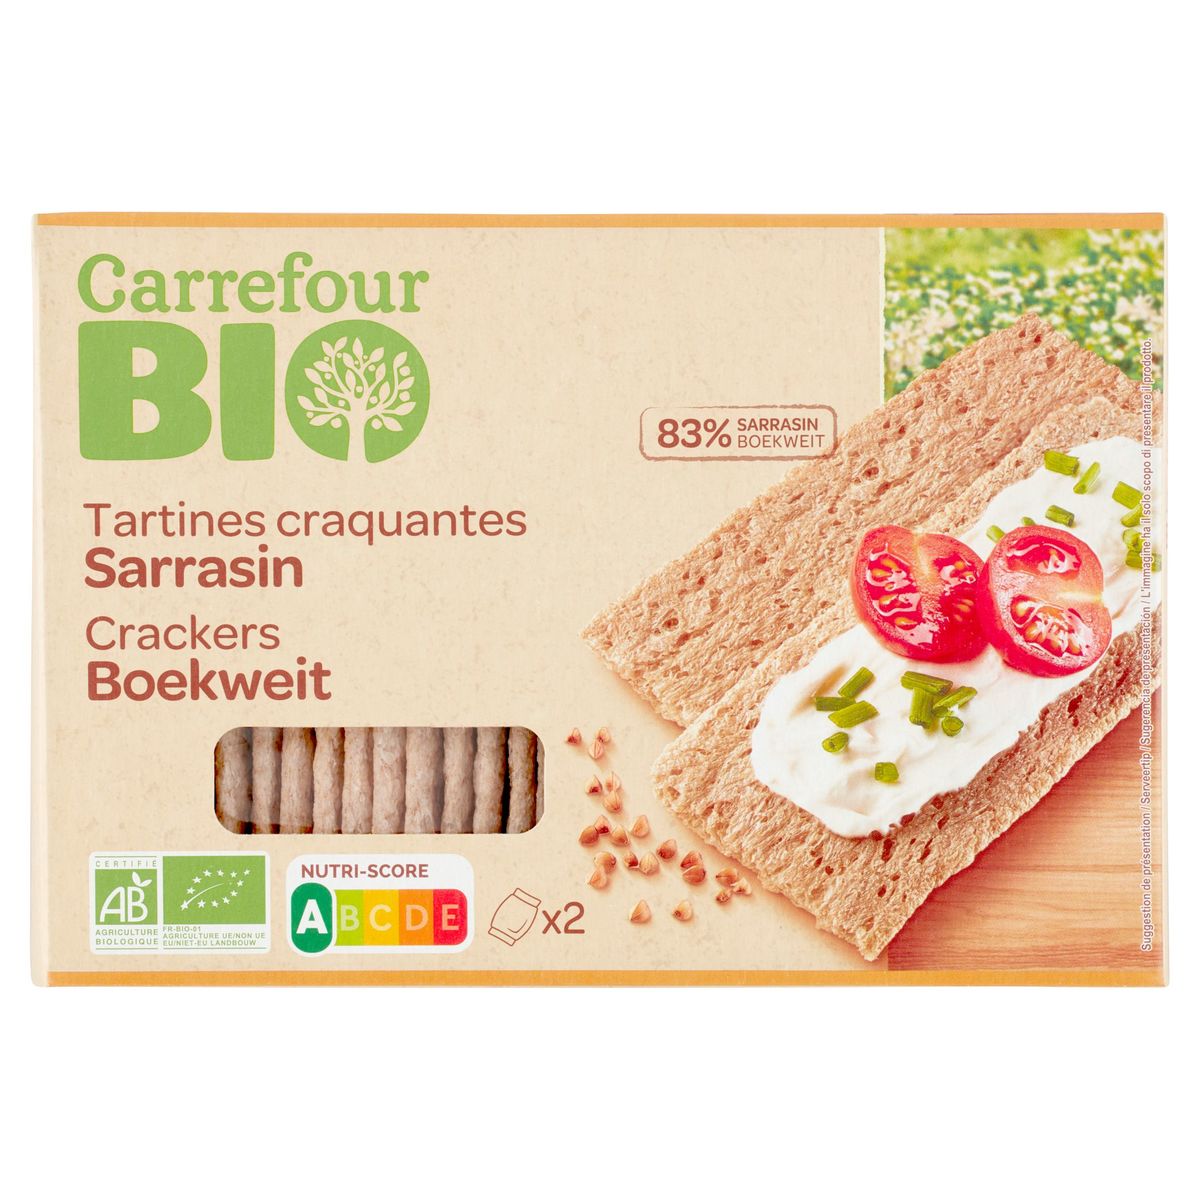 Carrefour Bio Crackers Boekweit  2 x 75 g